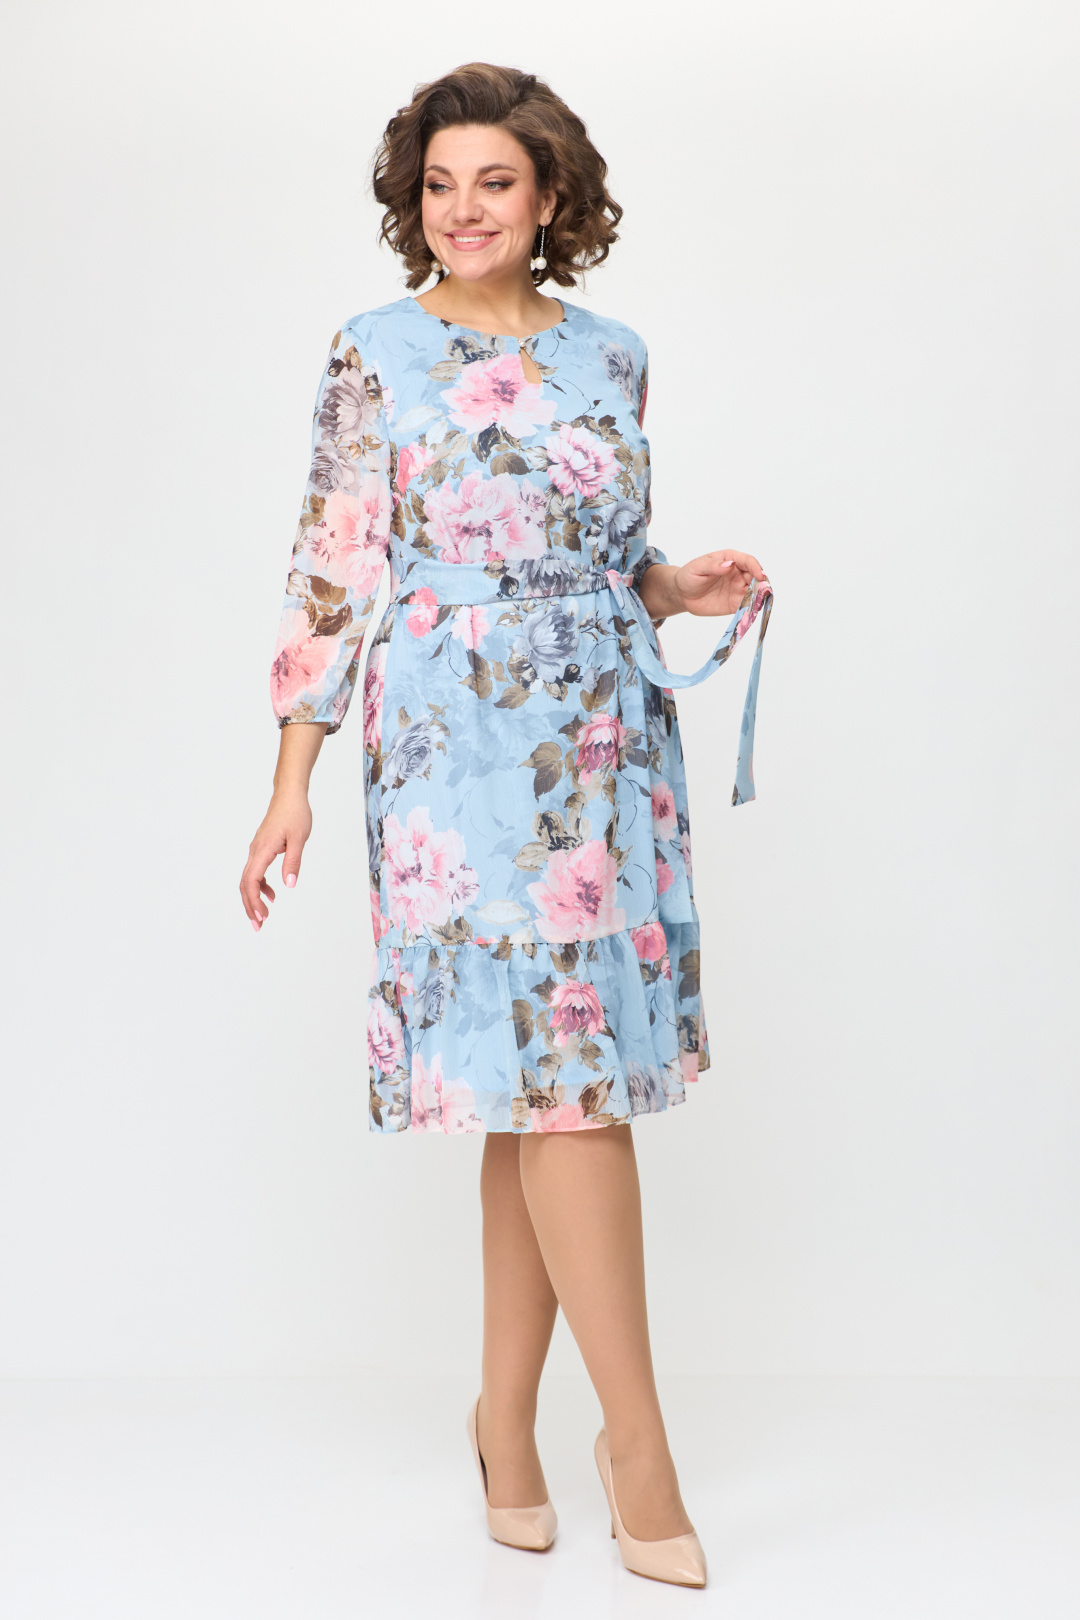 Платье Мода-Версаль 2453 голубой